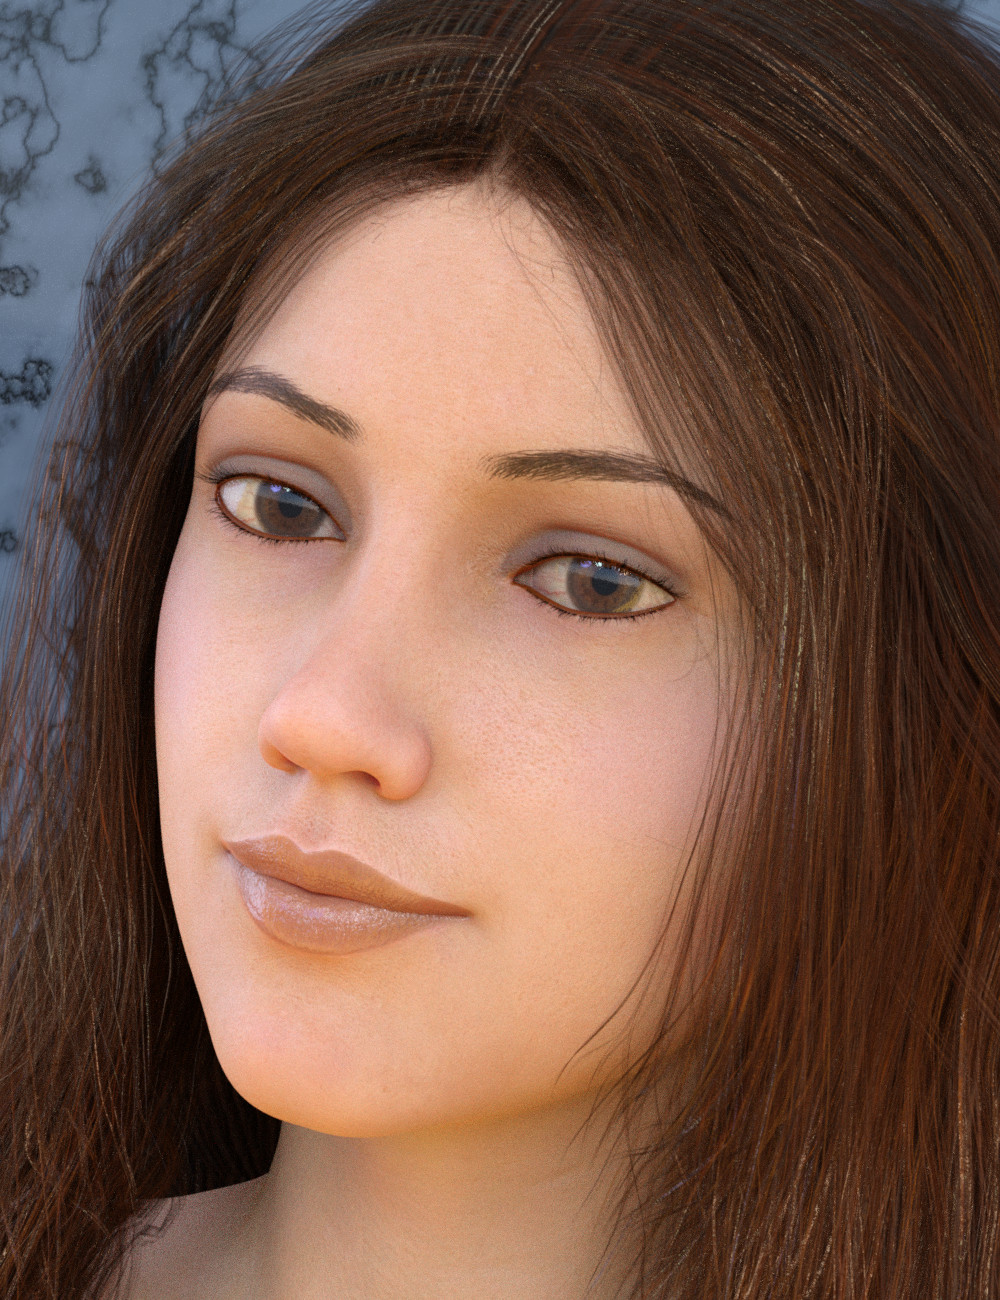 FSL Ultimate Layered Shimmer Makeups by: FuselingSickleyield, 3D Models by Daz 3D